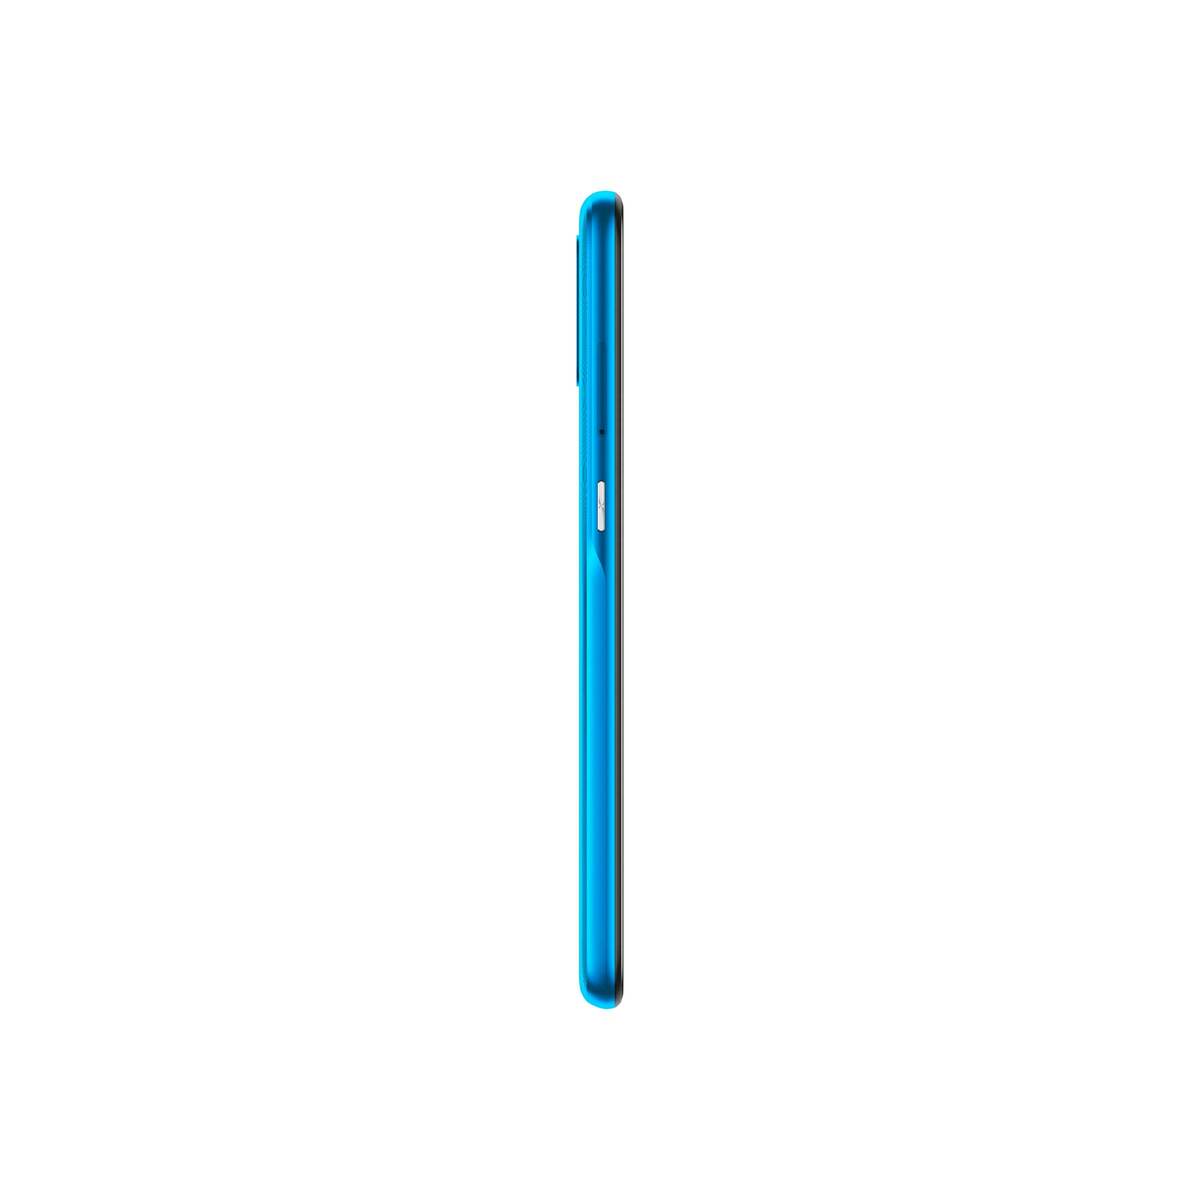 Alcatel 1SE-5030i 32GB Light Blue